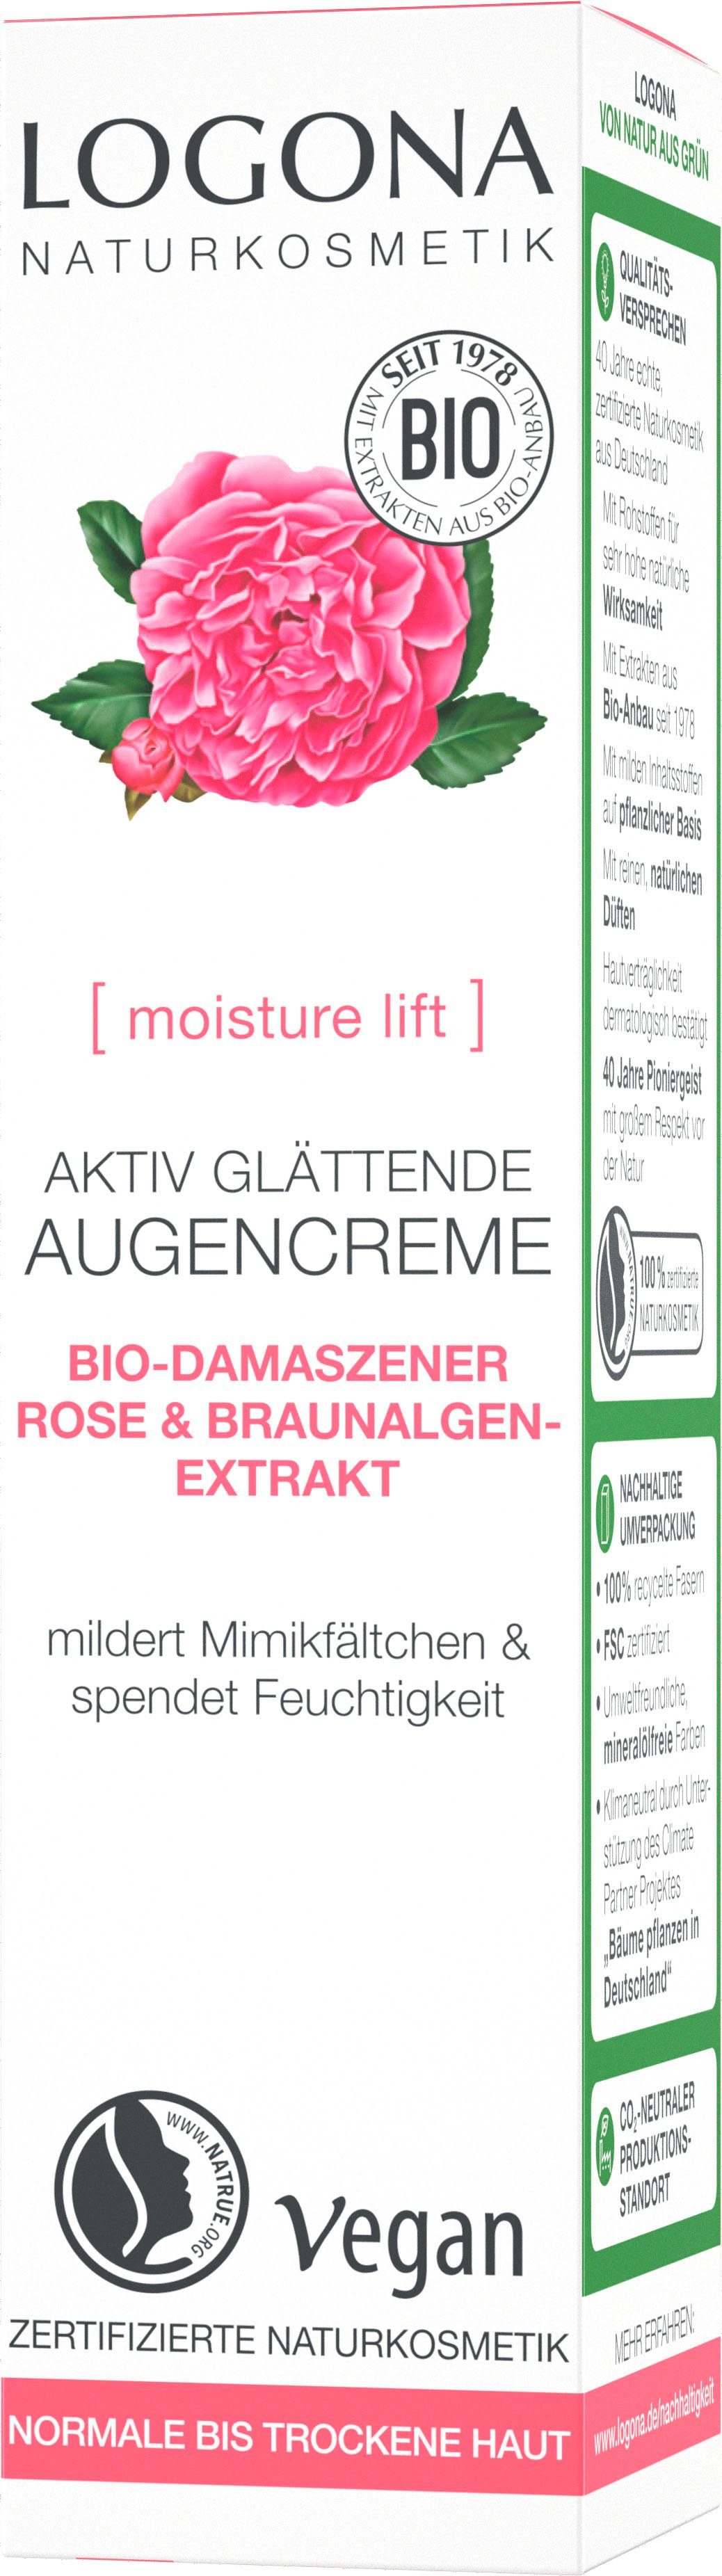 LOGONA Augencreme Logona moisture lift